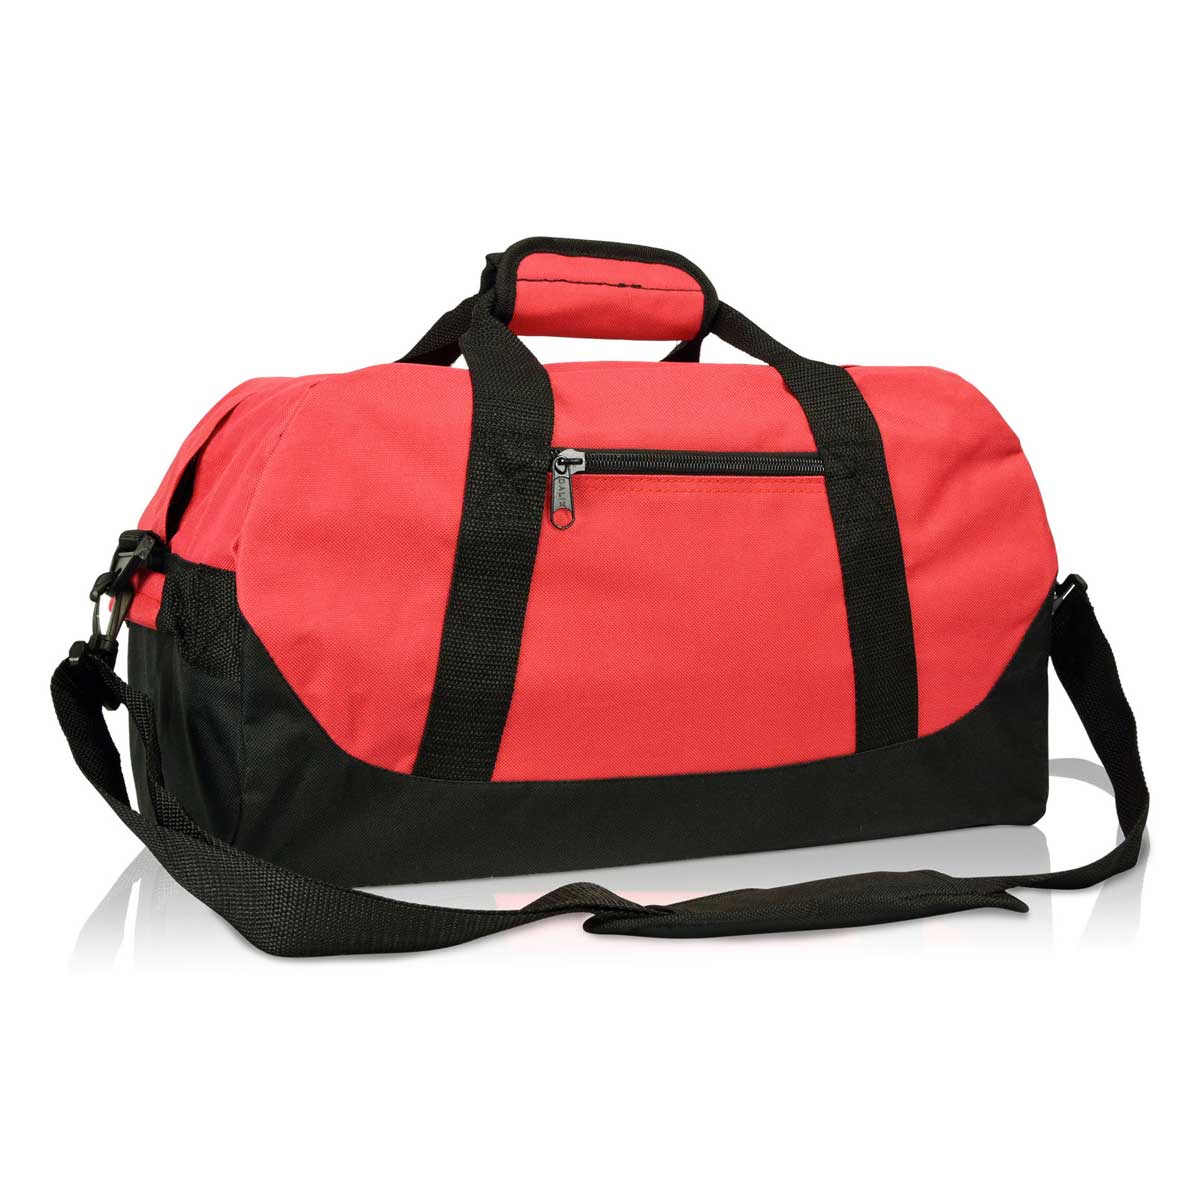 Dalix 14 Small Duffle Bag Two Toned Gym Travel Bag (Purple)